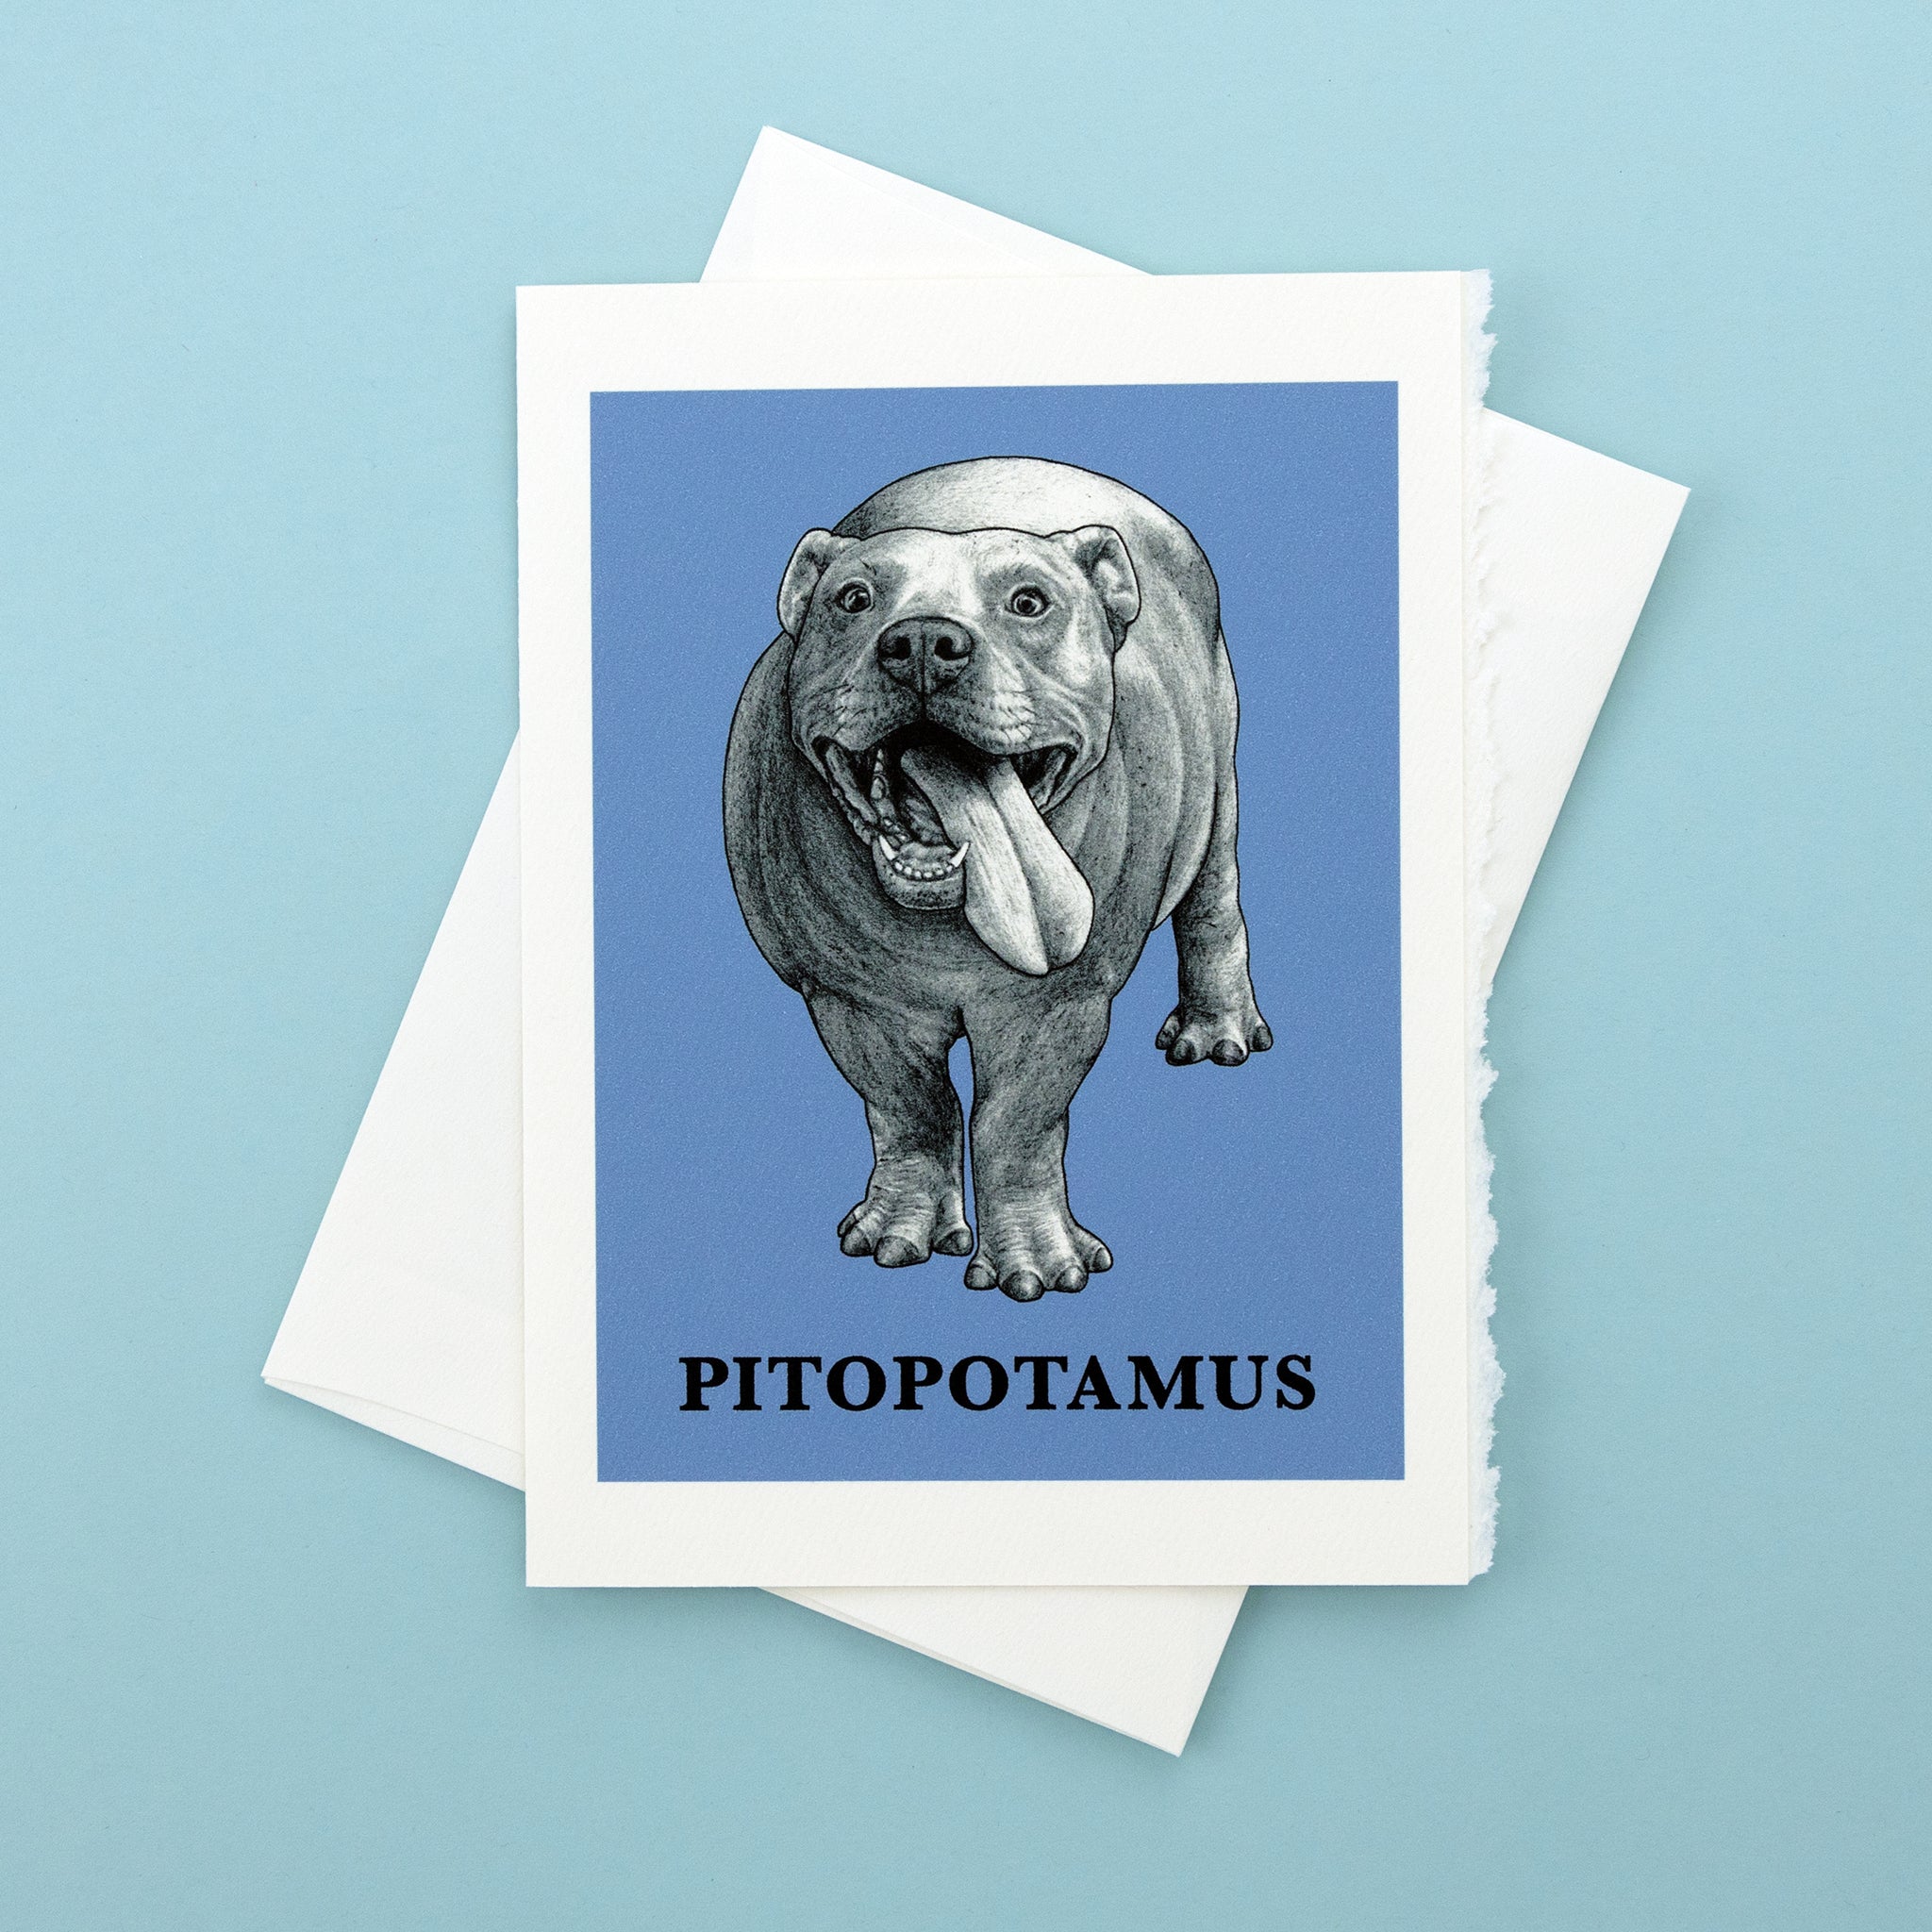 Pitopotamus | Pitbull + Hippopotamus Hybrid Animal | 5x7" Greeting Card